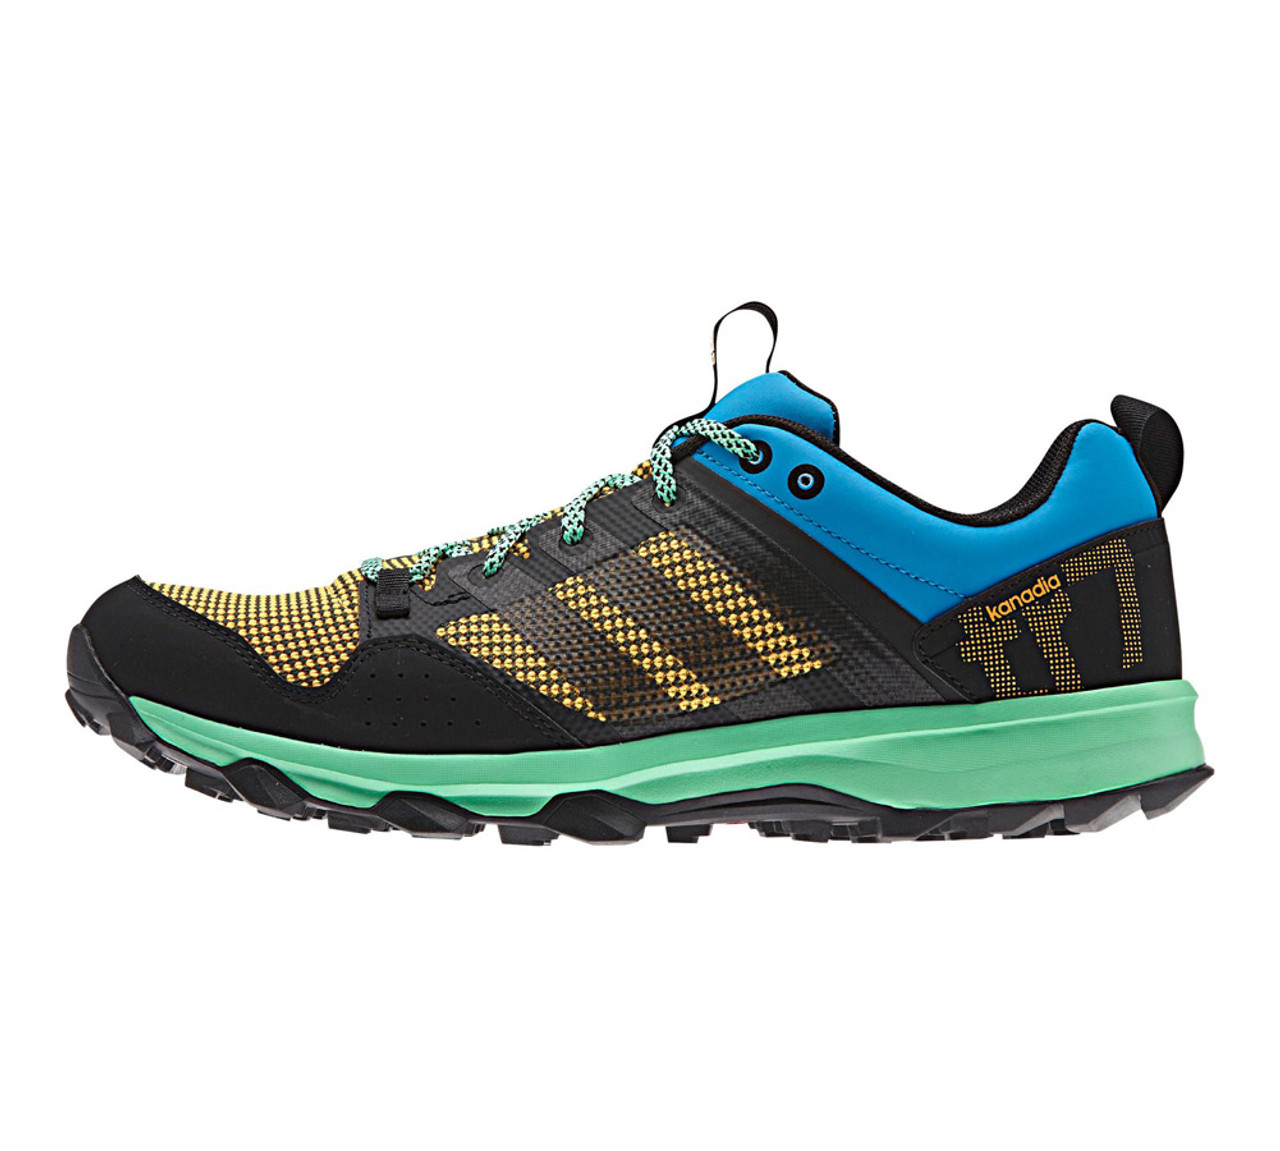 Corea ayuda parilla Adidas Men's Kanadia 7 TR Trail Runner - Multicoloured | Discount Adidas  Men's Athletic Shoes & More - Shoolu.com | Shoolu.com